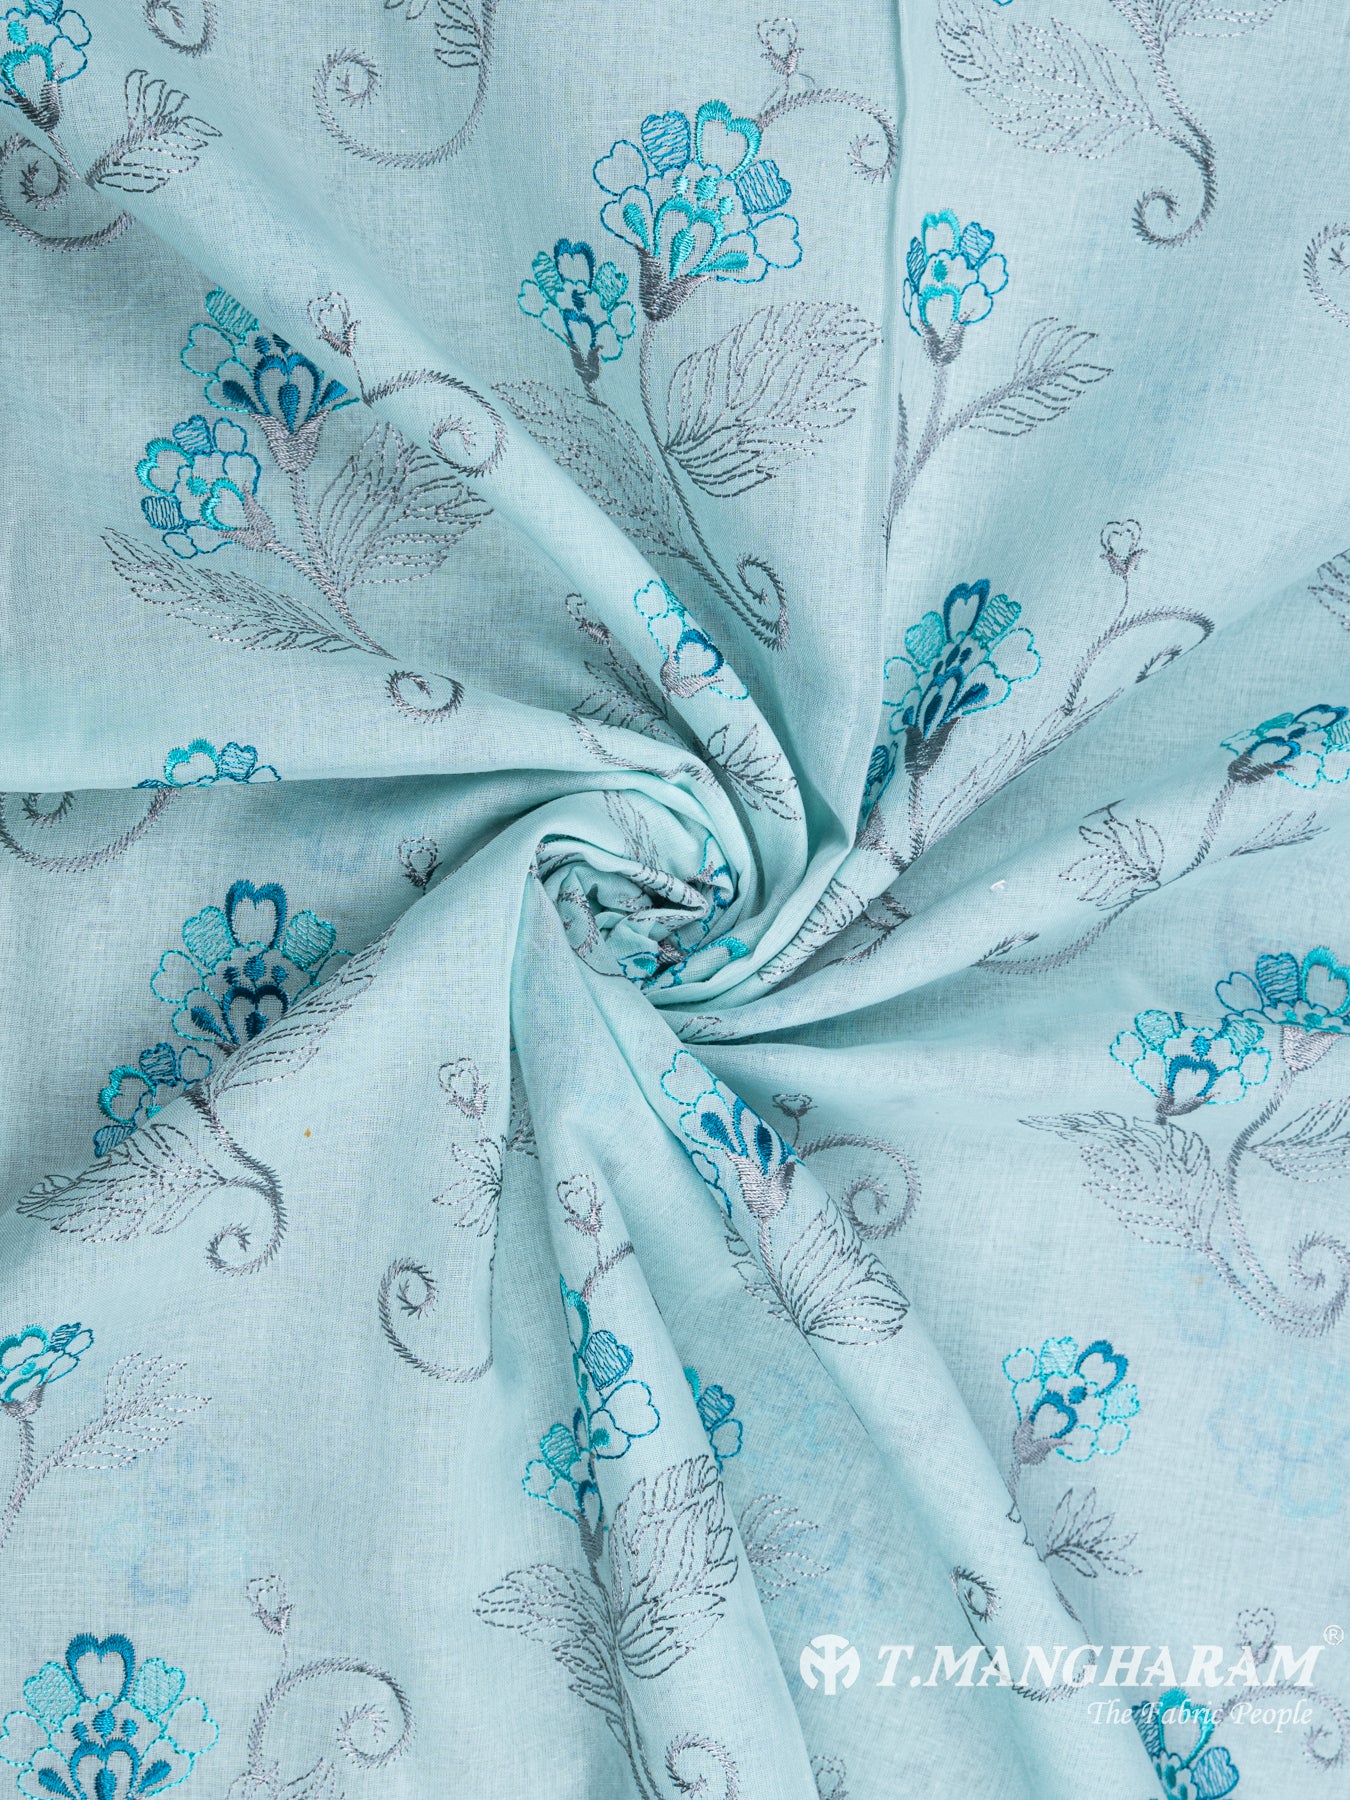 Sea Green Cotton Embroidery Fabric - EB4693 view-1